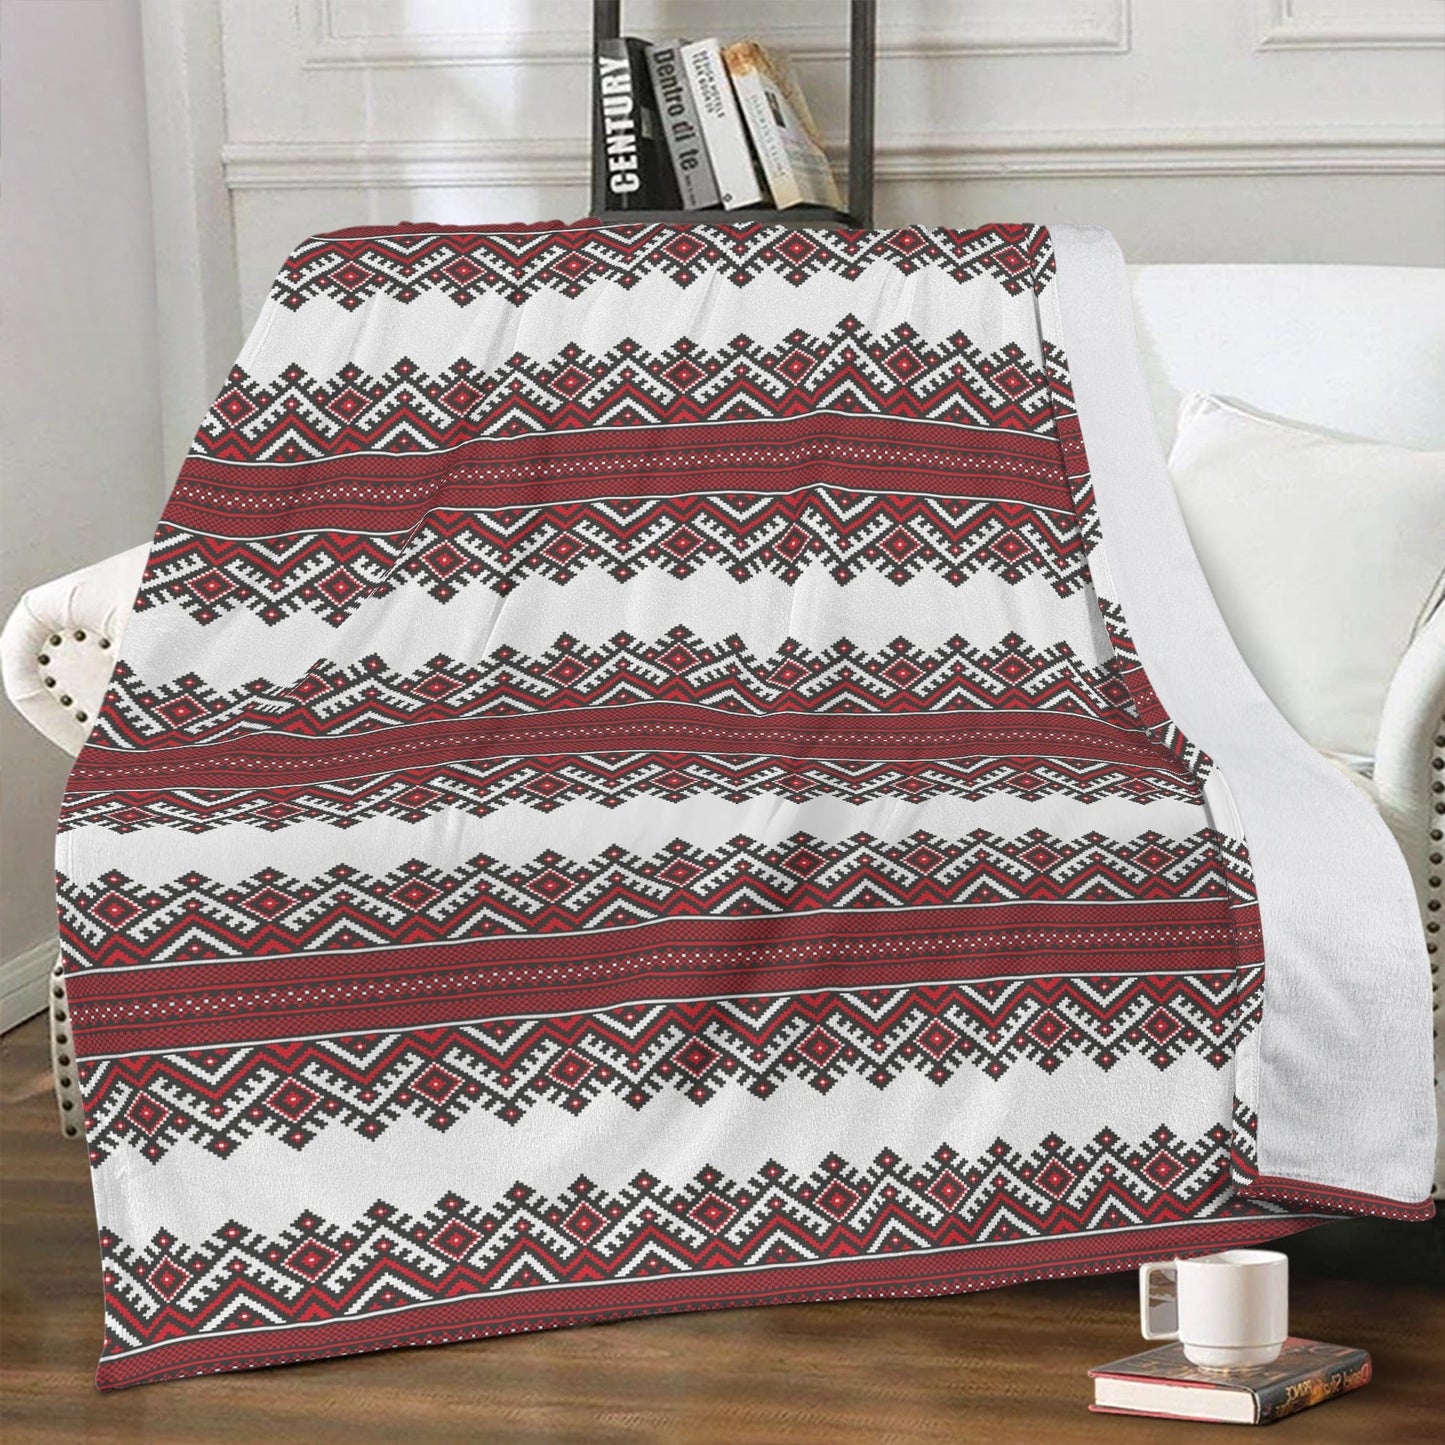 Red and White Ukrainian Folk Art Soft Polyester Premium Fleece Blanket  Pioneer Kitty Market XS (Twin)  